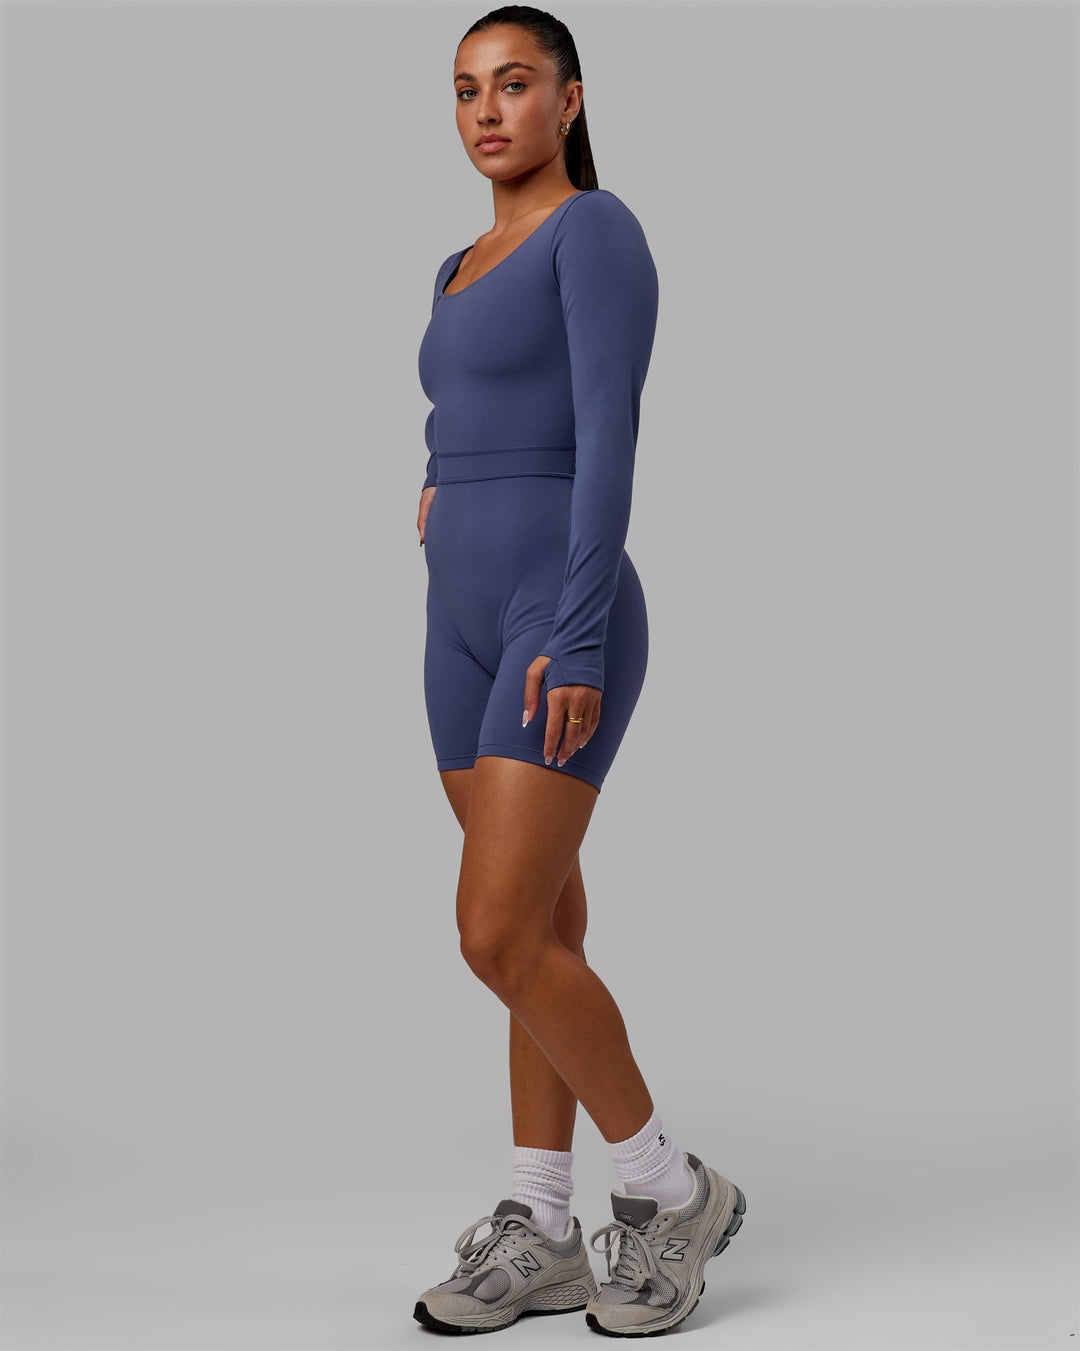 Woman wearing Focus Long Sleeve Bodysuit - Future Dusk